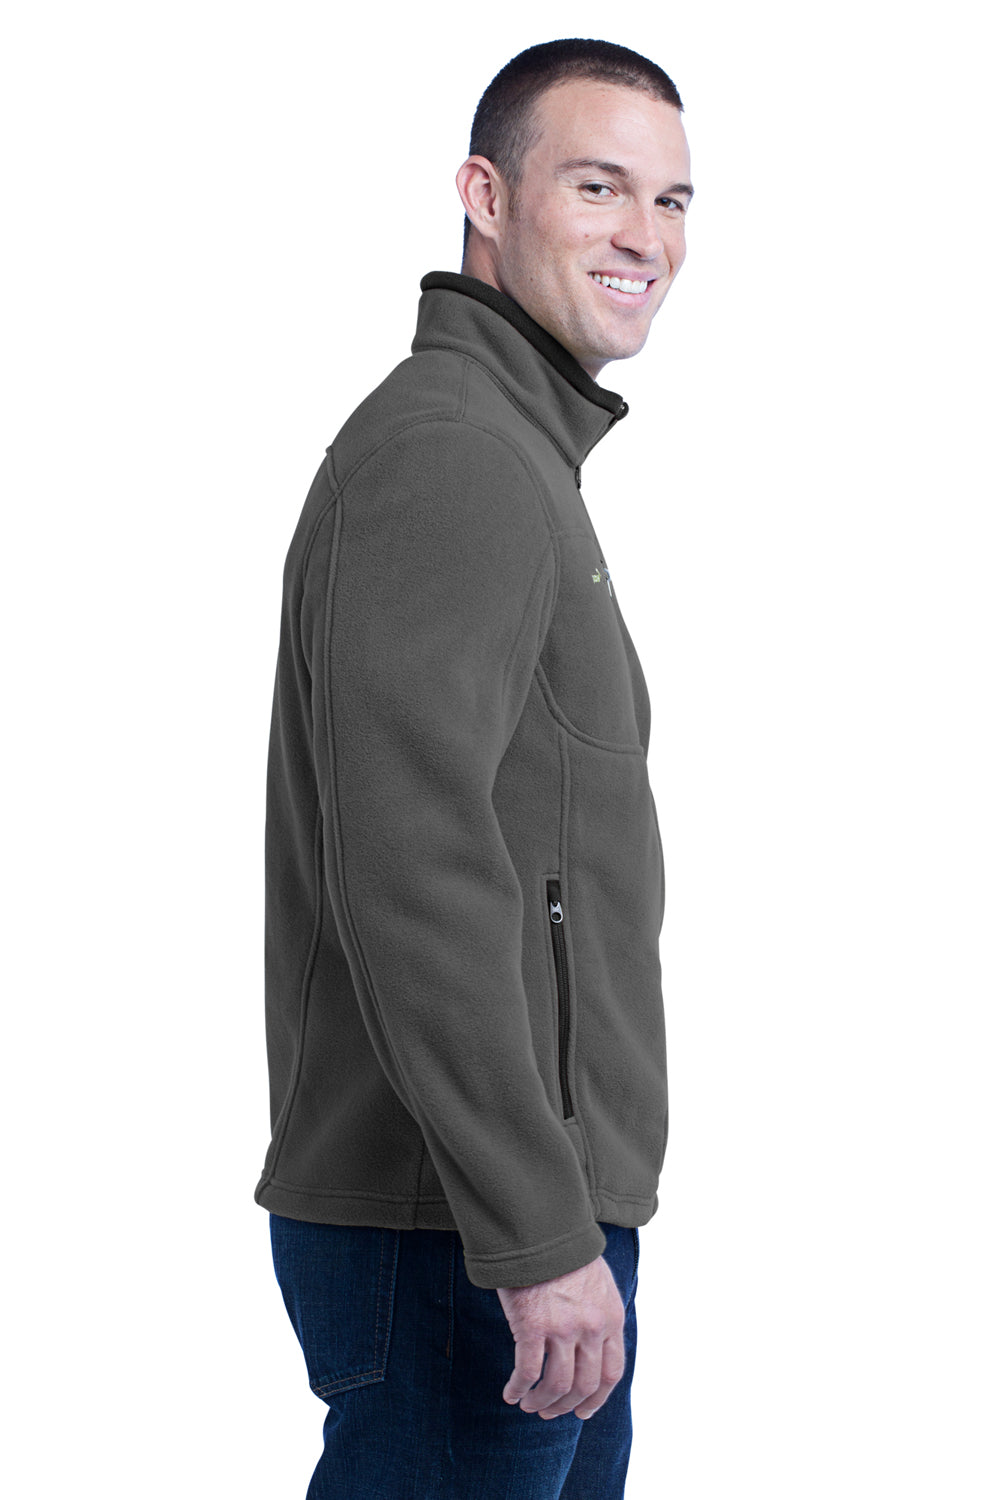 Eddie Bauer EB200 Mens Full Zip Fleece Jacket Steel Grey Model Side